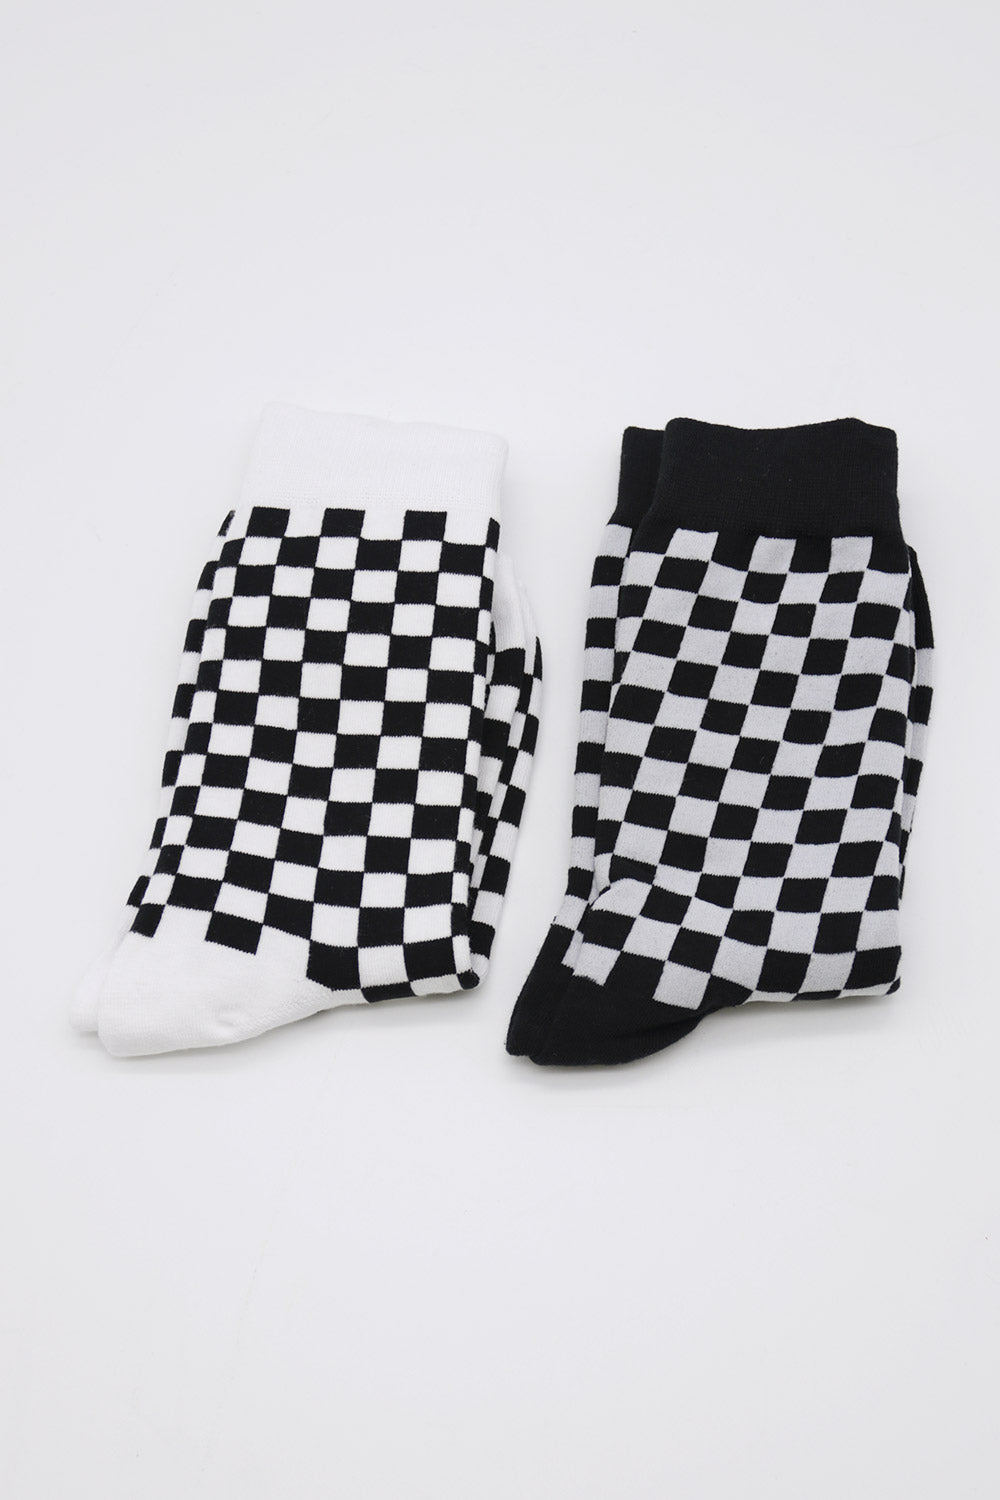 storets.com Monica Checkerboard Socks Set (2pairs)